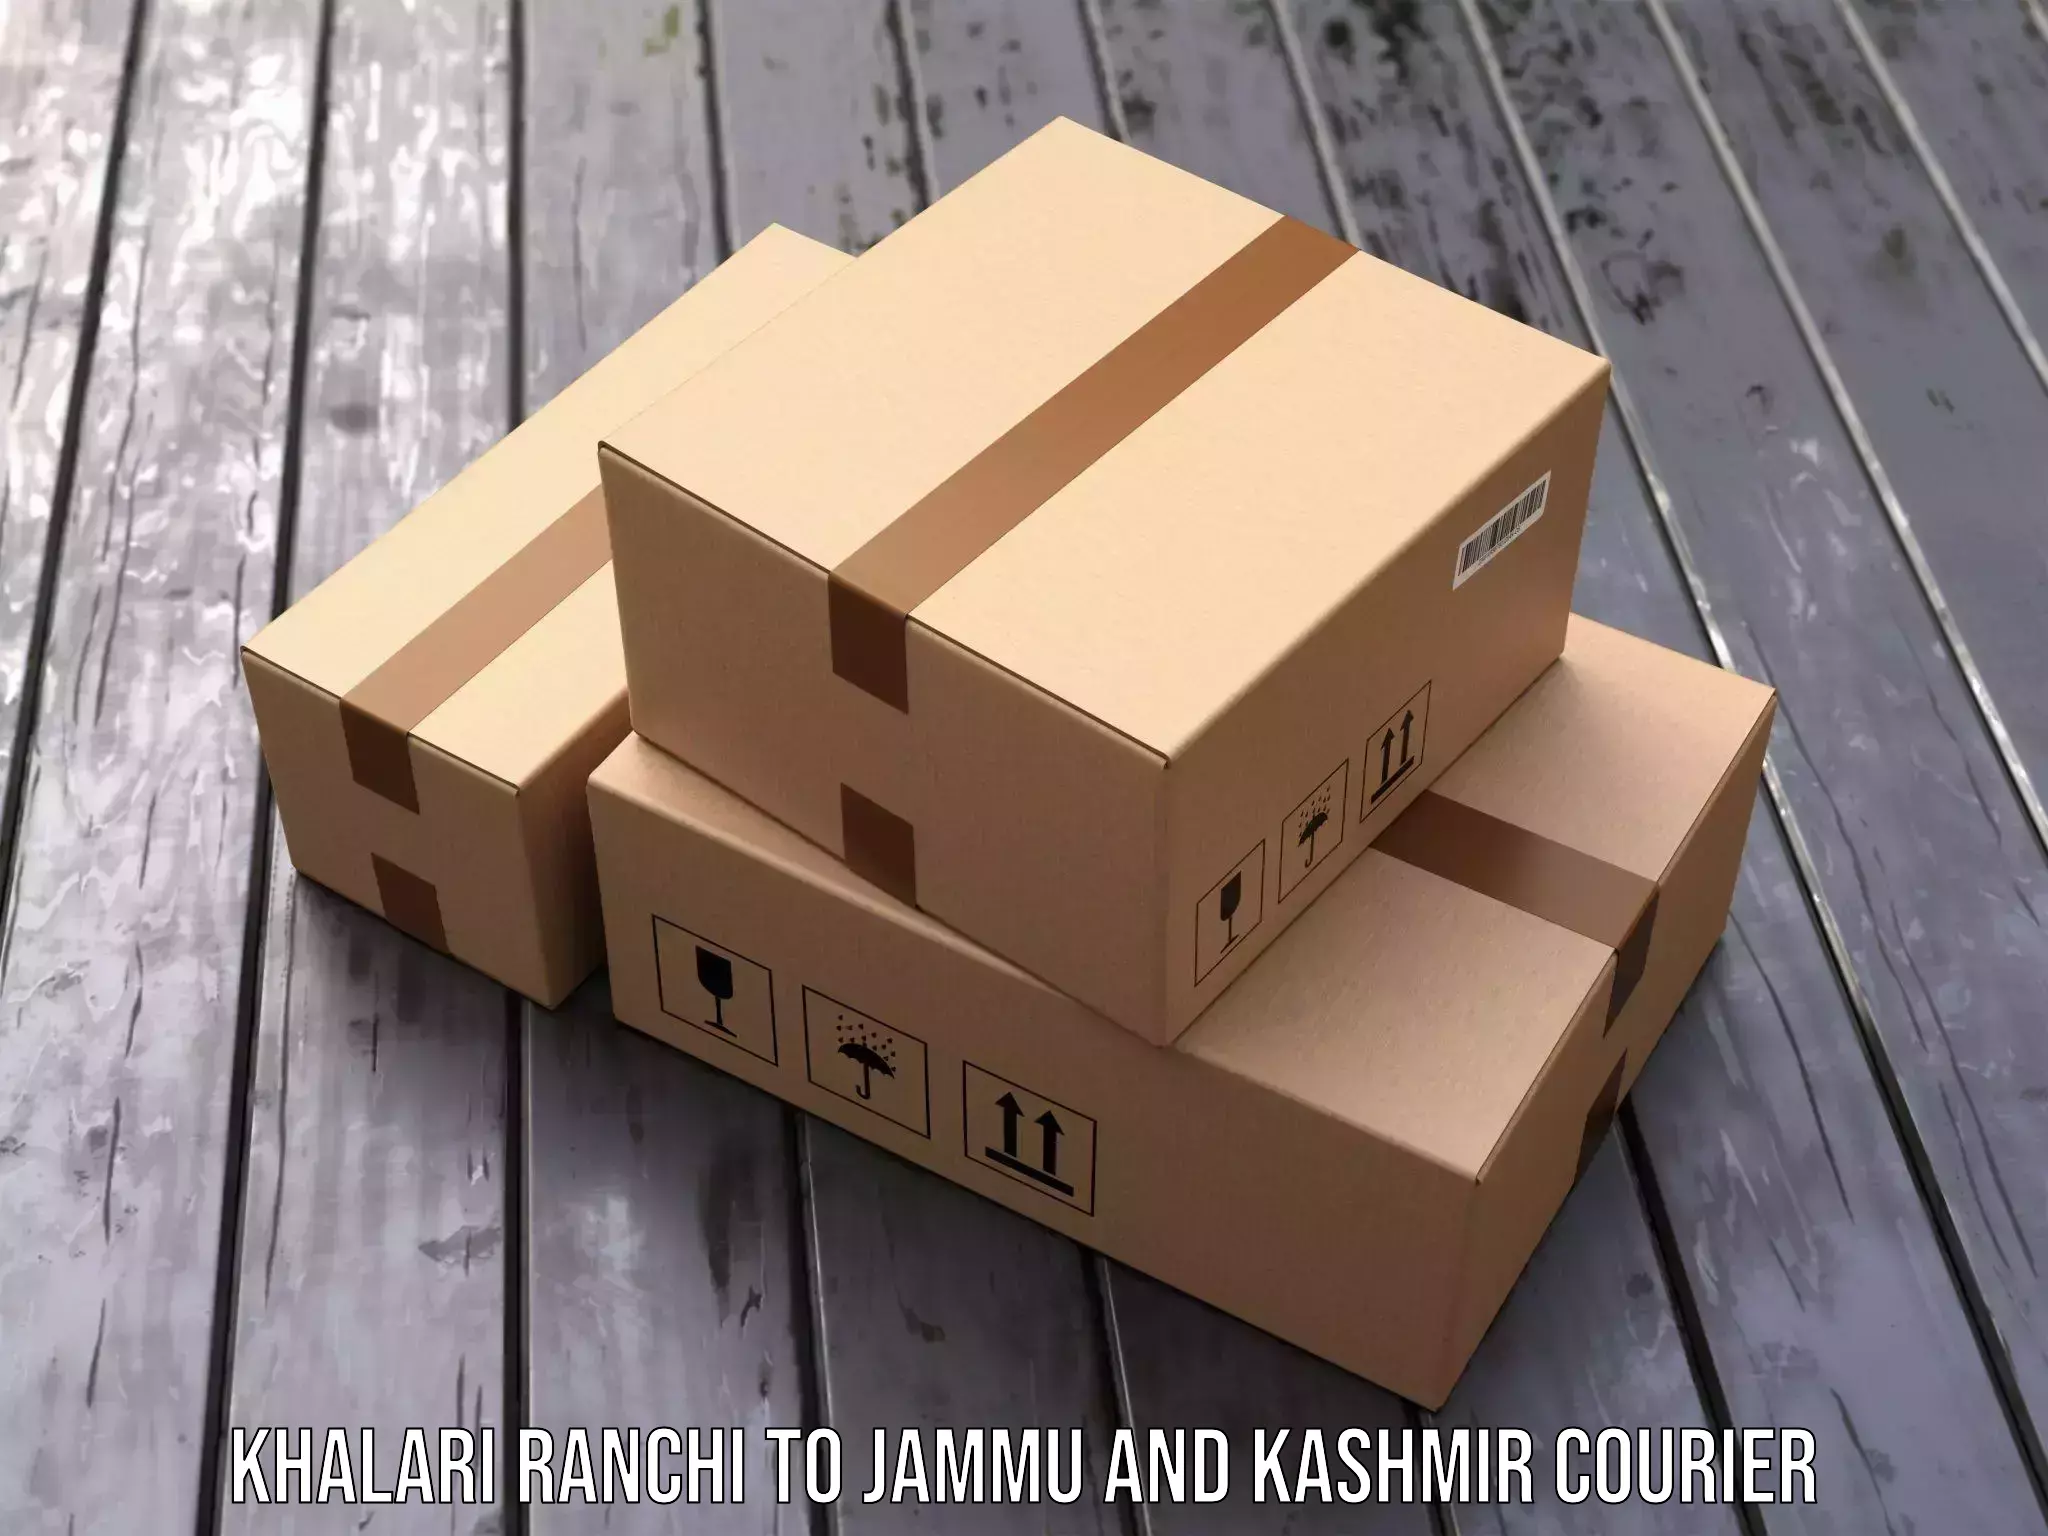 Enhanced tracking features in Khalari Ranchi to Jammu and Kashmir